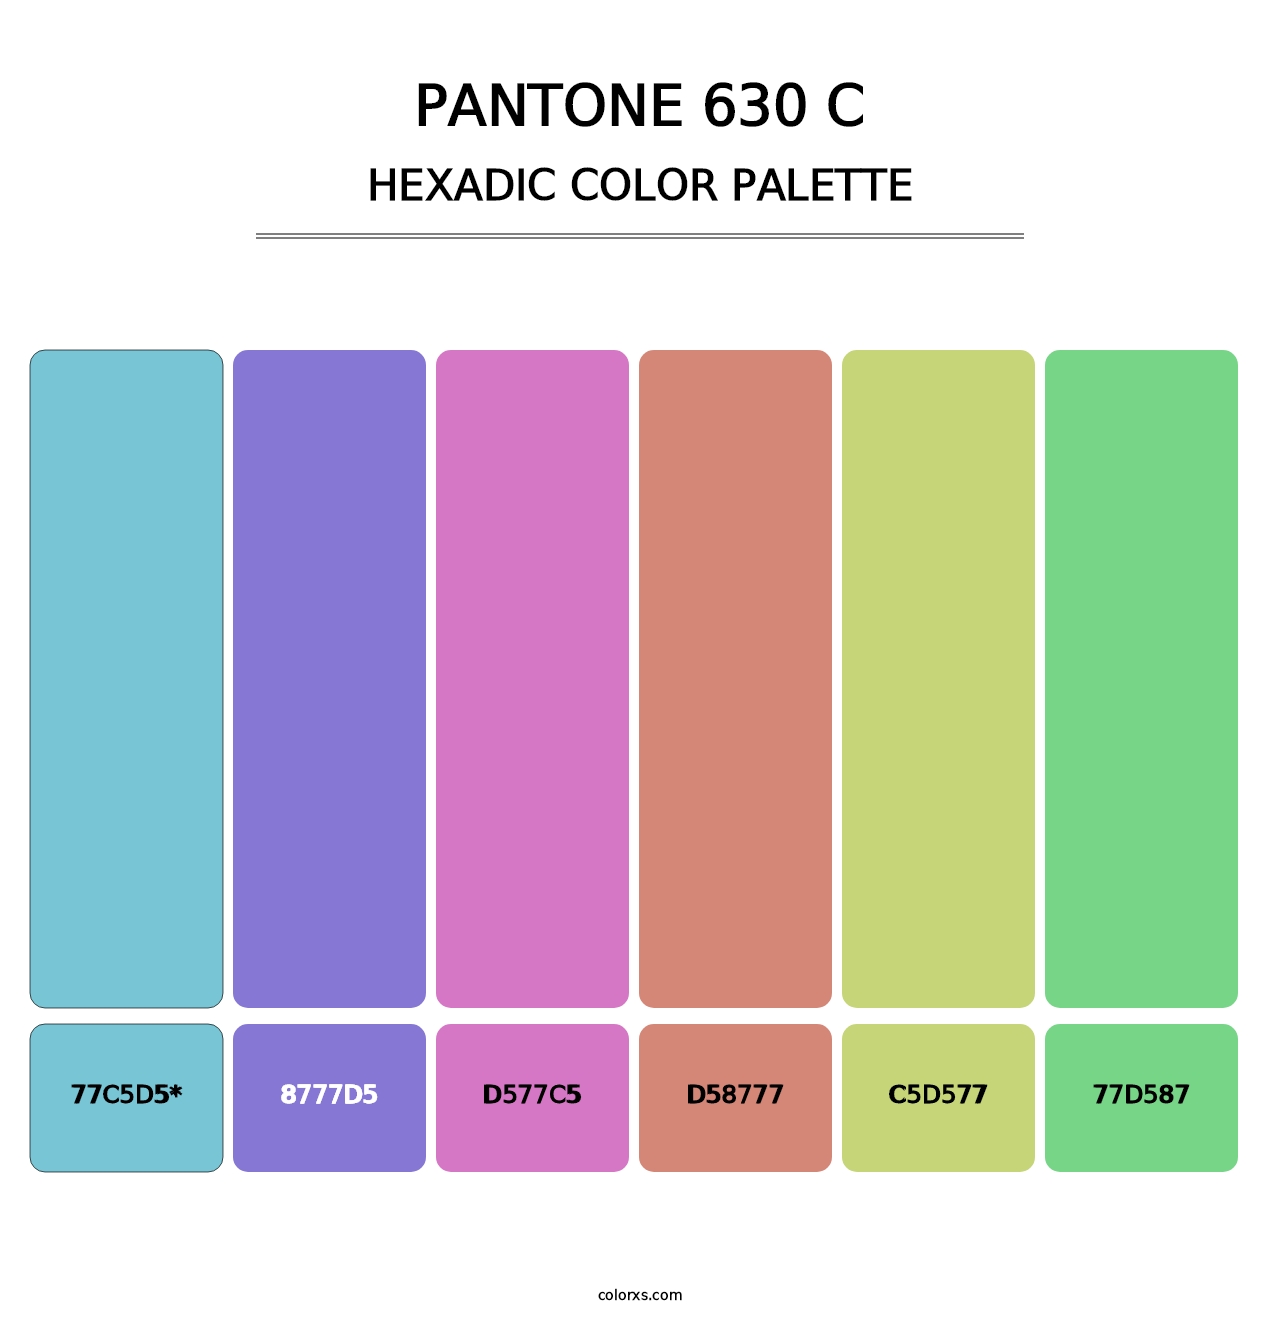 PANTONE 630 C - Hexadic Color Palette